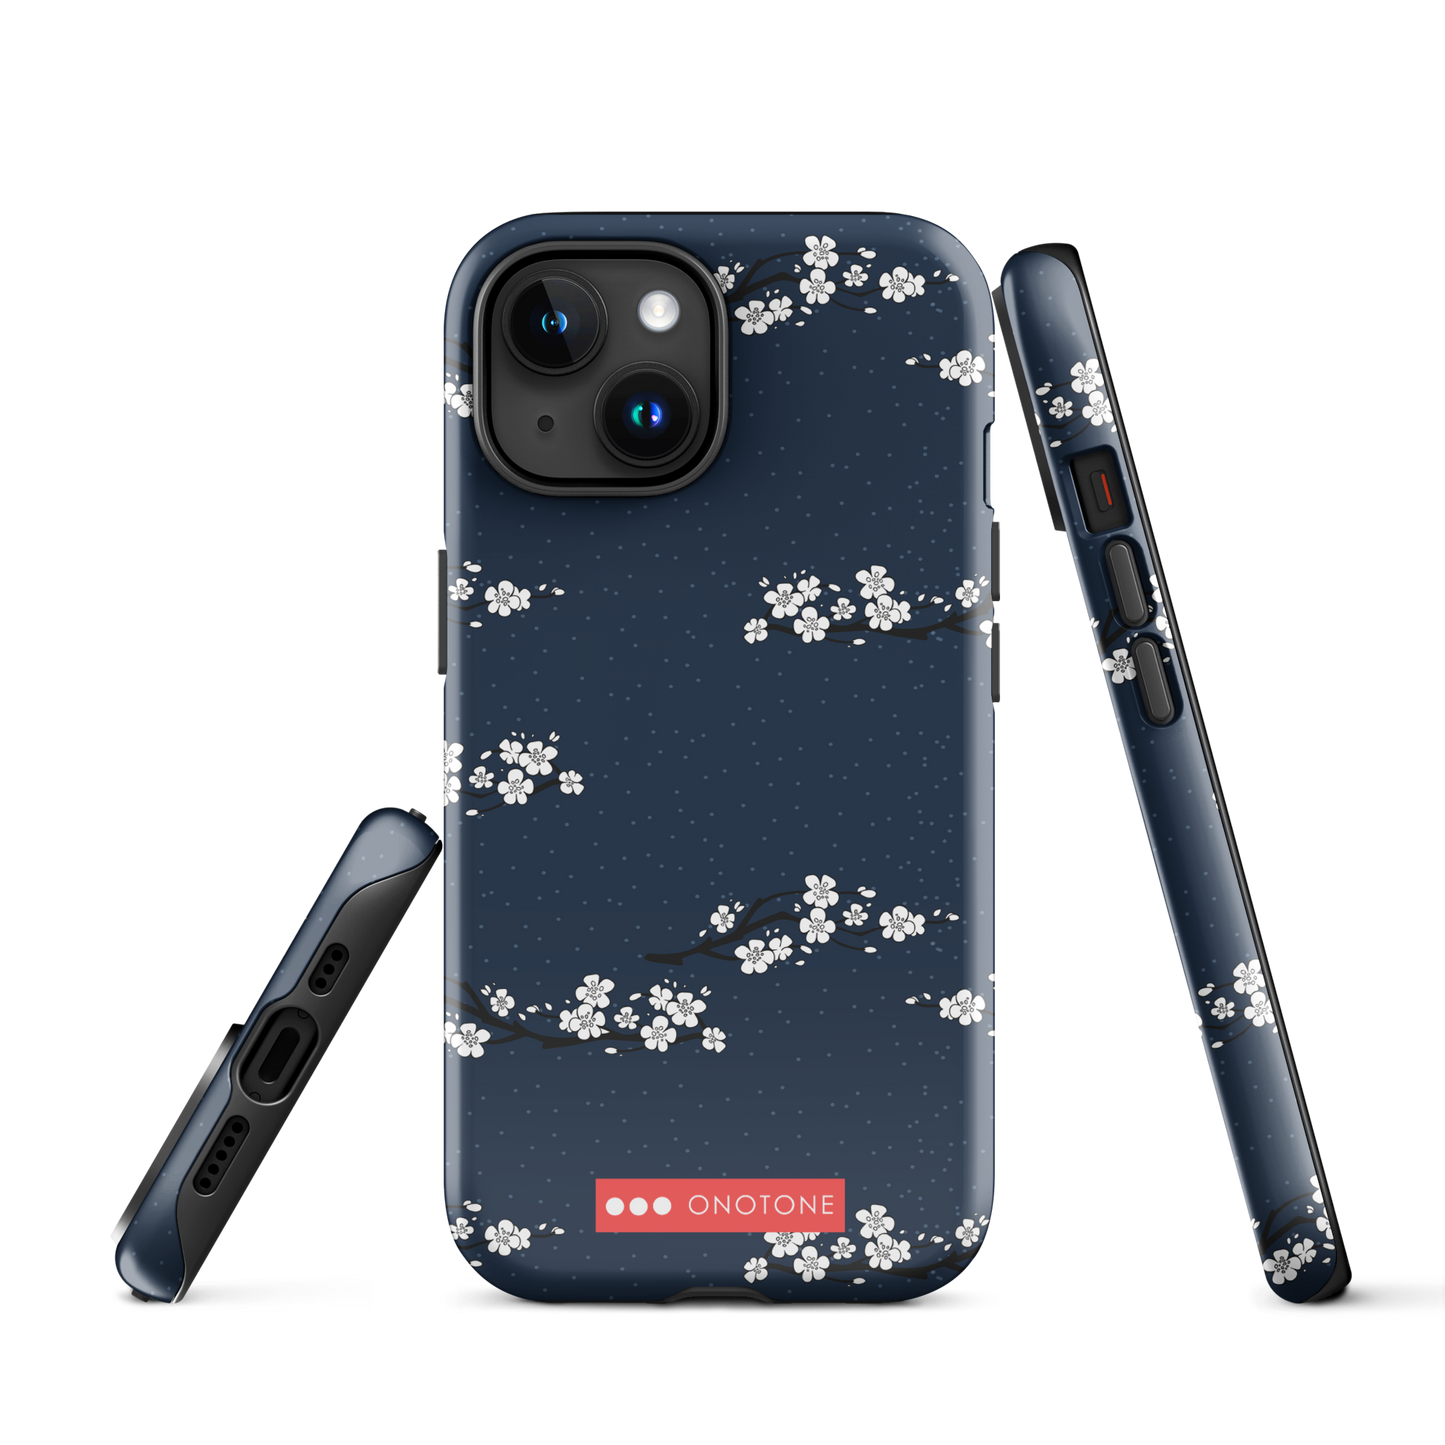 Japanese design indigo iPhone® Case with cherry blossoms